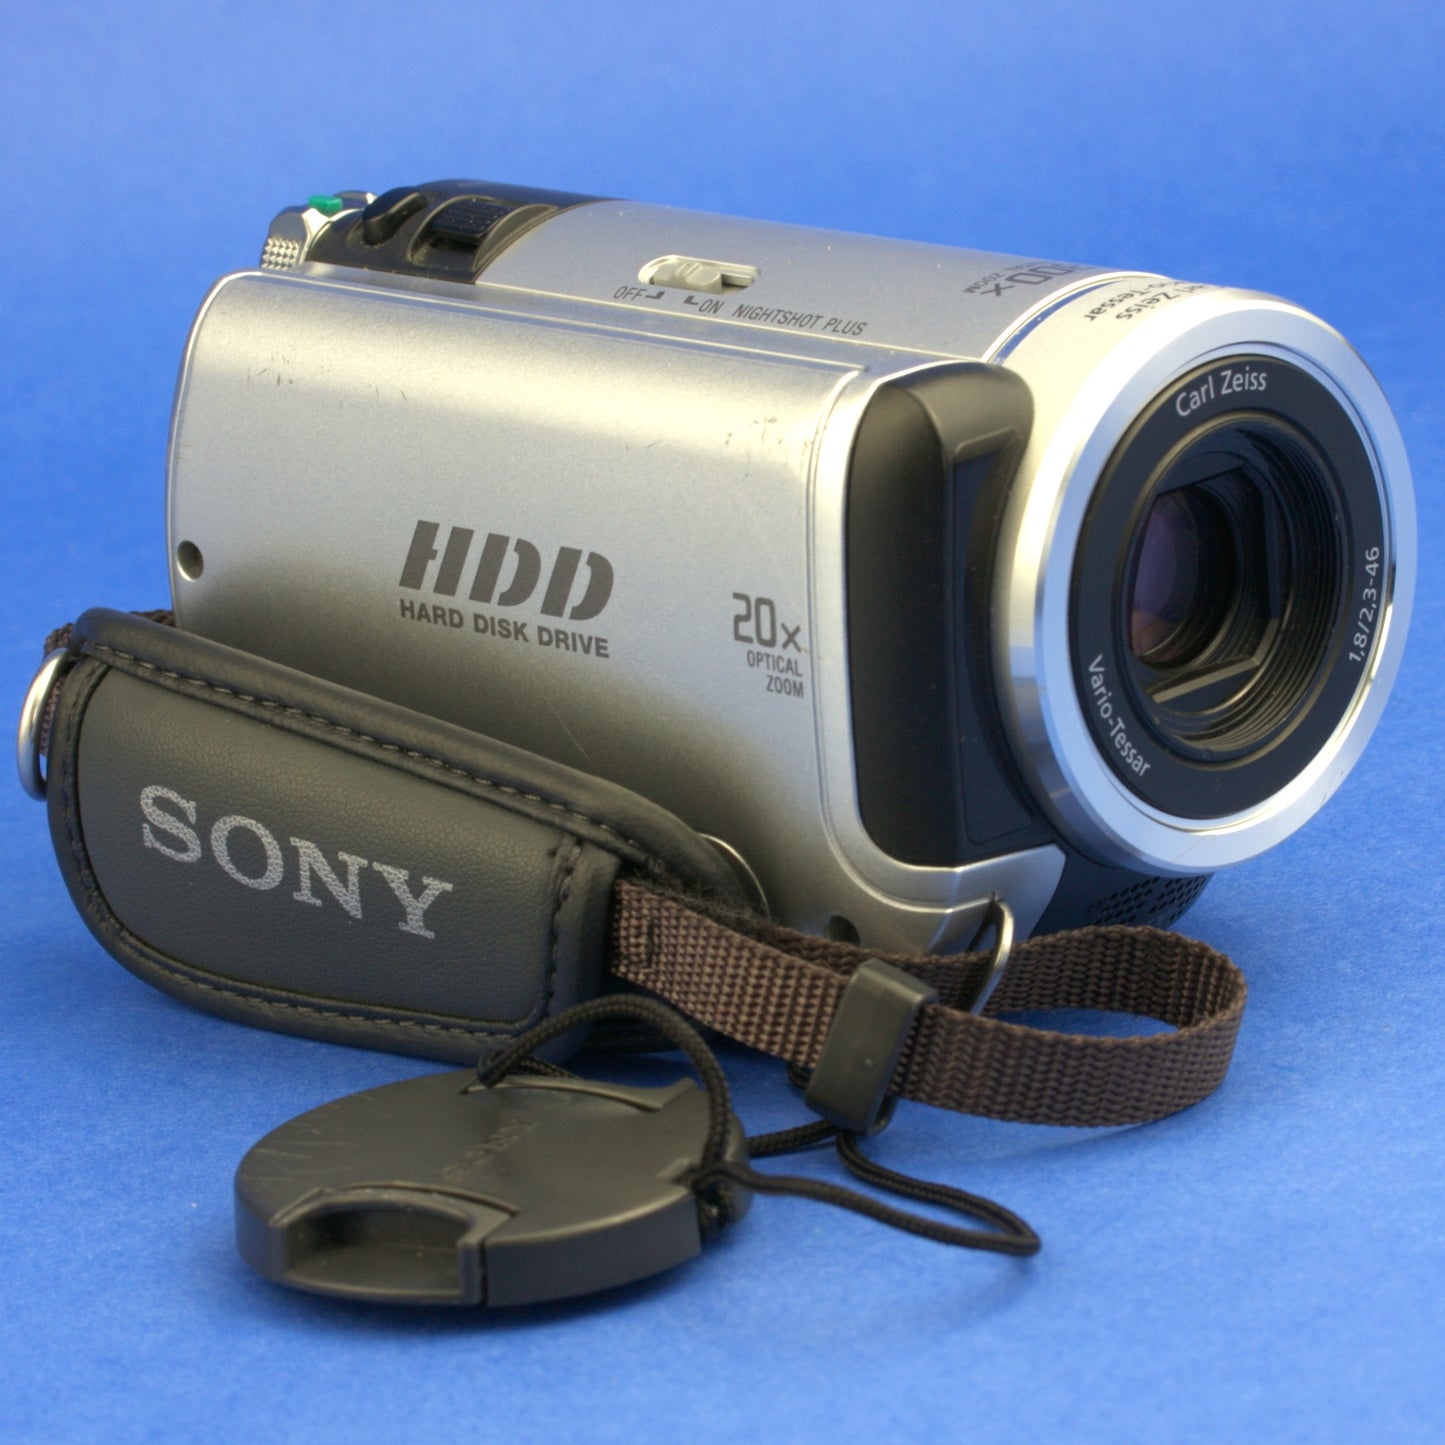 Sony DCR-SR40 Digital Video Camera Missing Docking Station